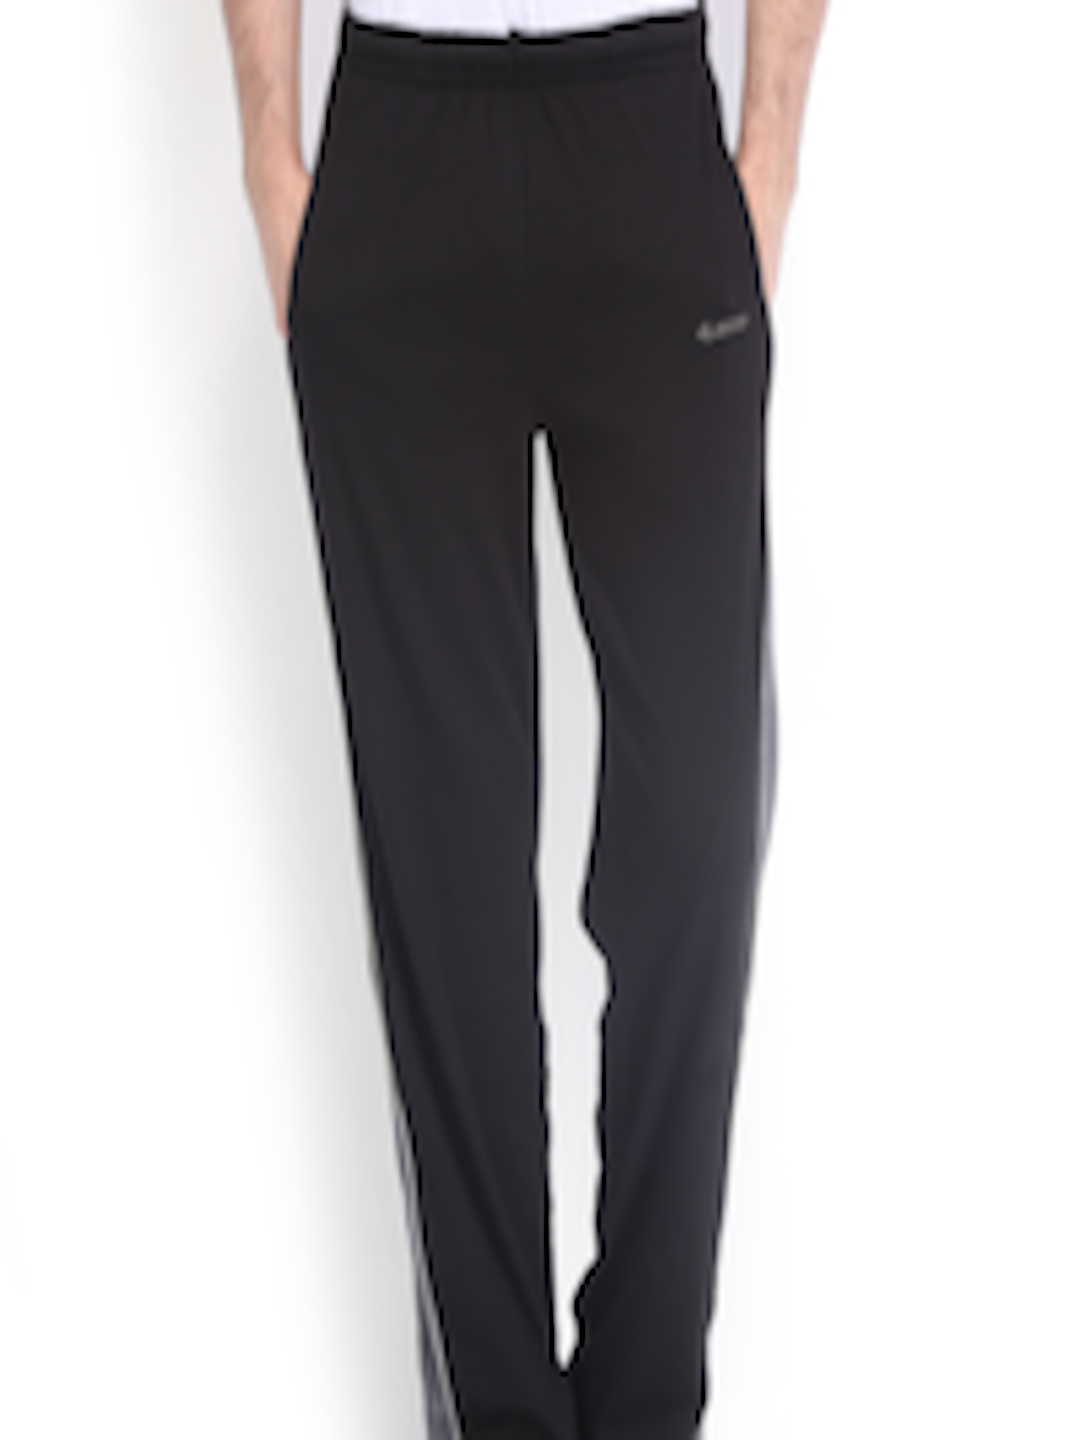 Buy Jockey SPORT Men Black Relaxed Fit Track Pants 9502 - Track Pants ...